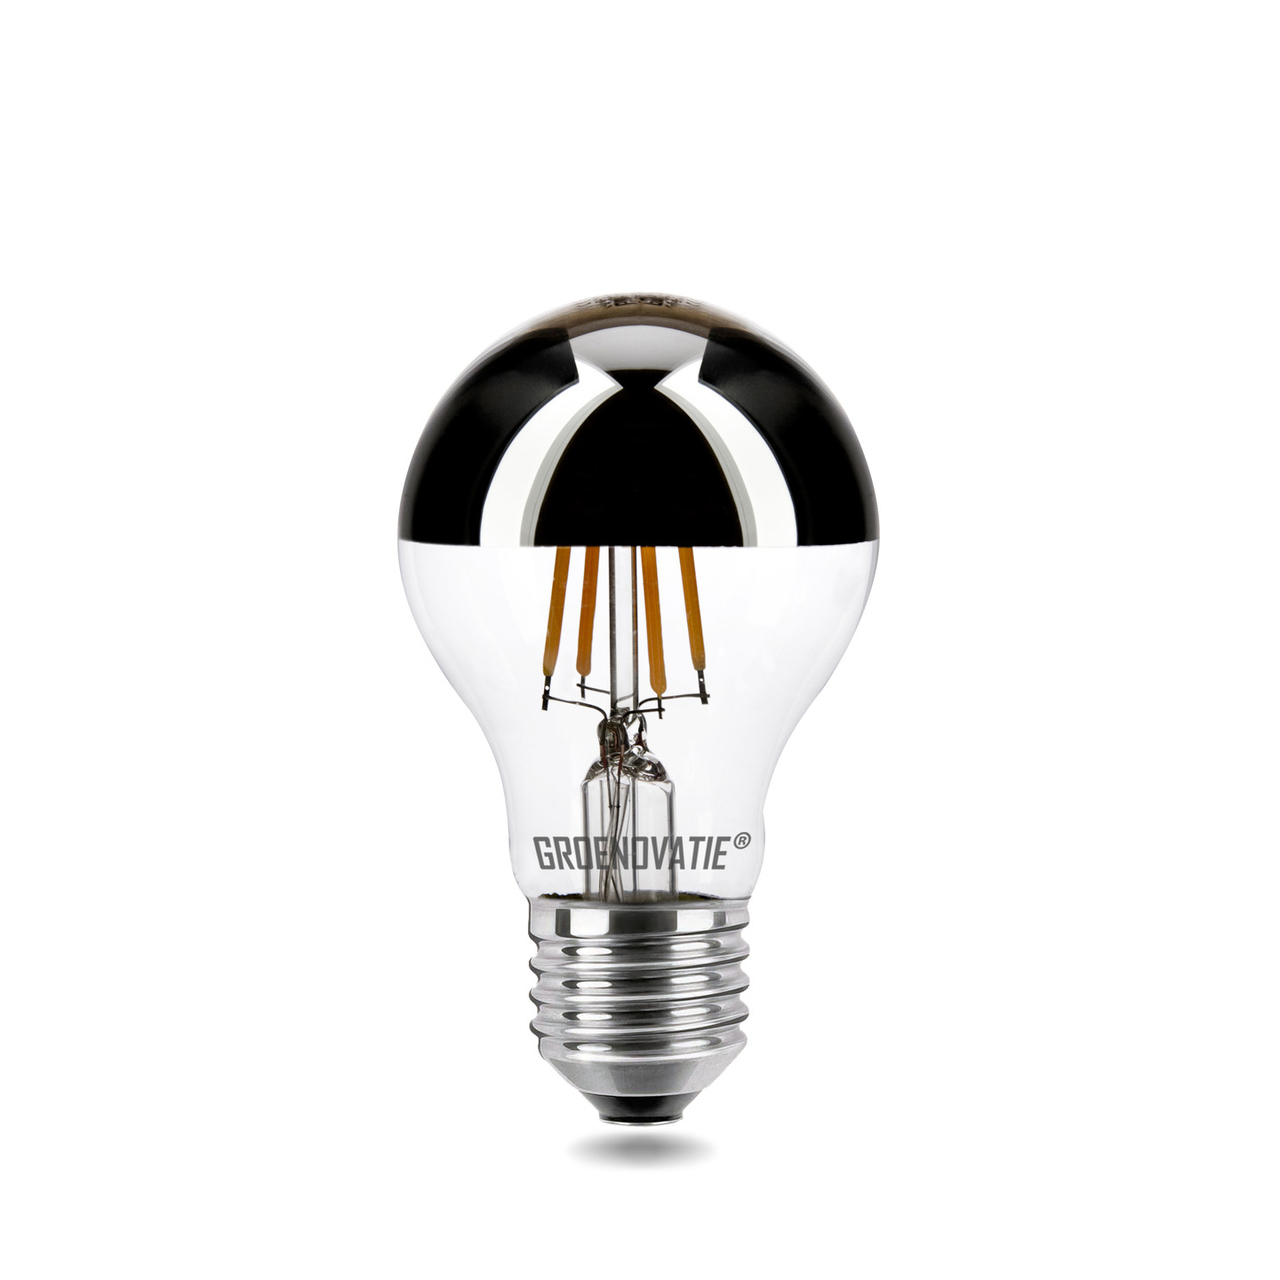 Classificeren auteur Publicatie E27 LED Filament Kopspiegellamp 4 Watt - Kopspiegel LED lampen